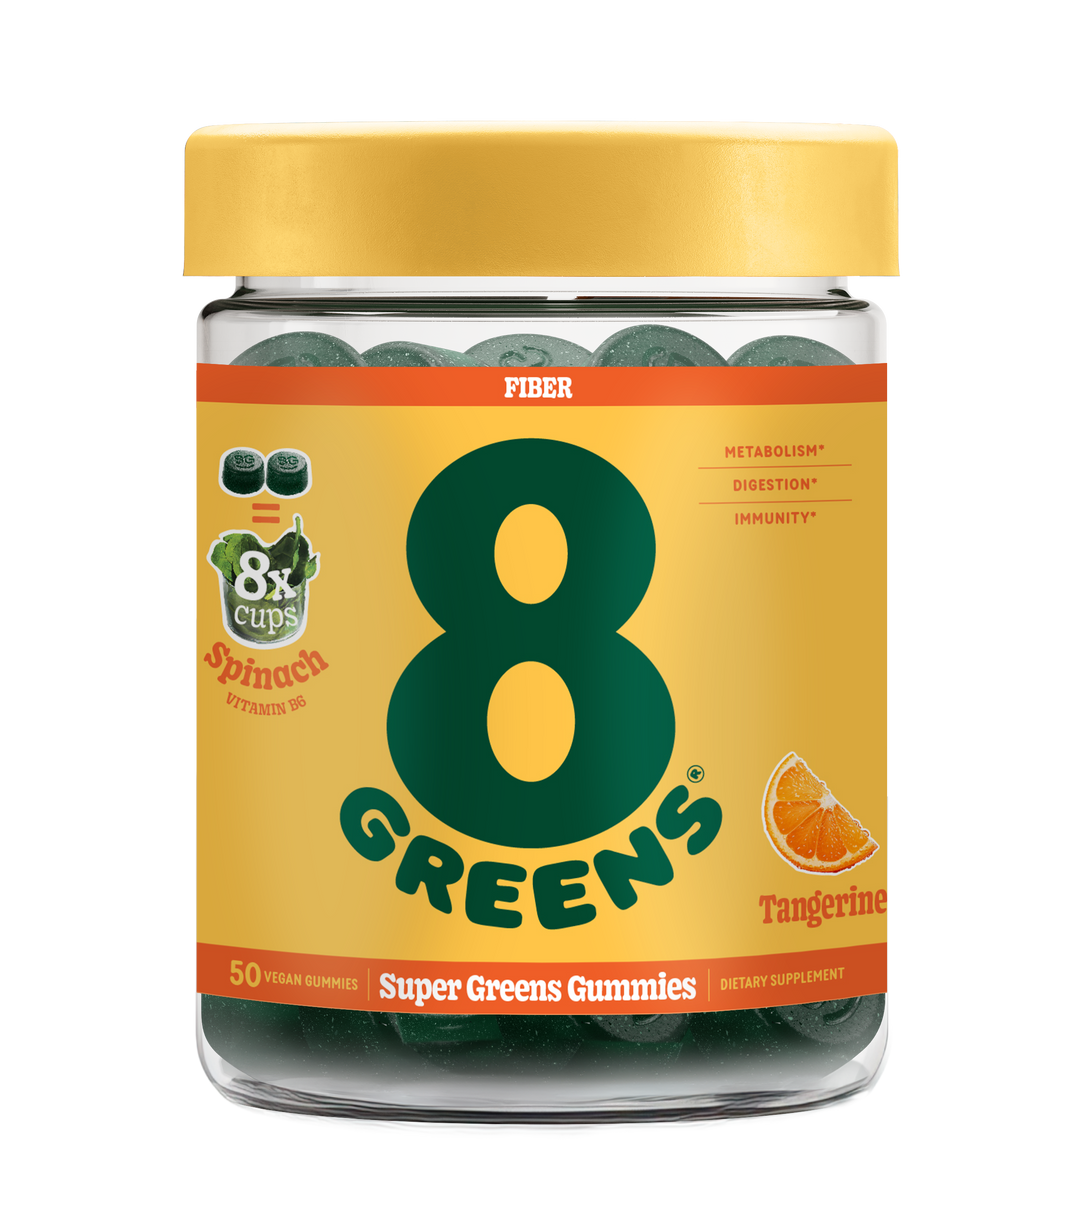 super greens gummies fiber - tangerine